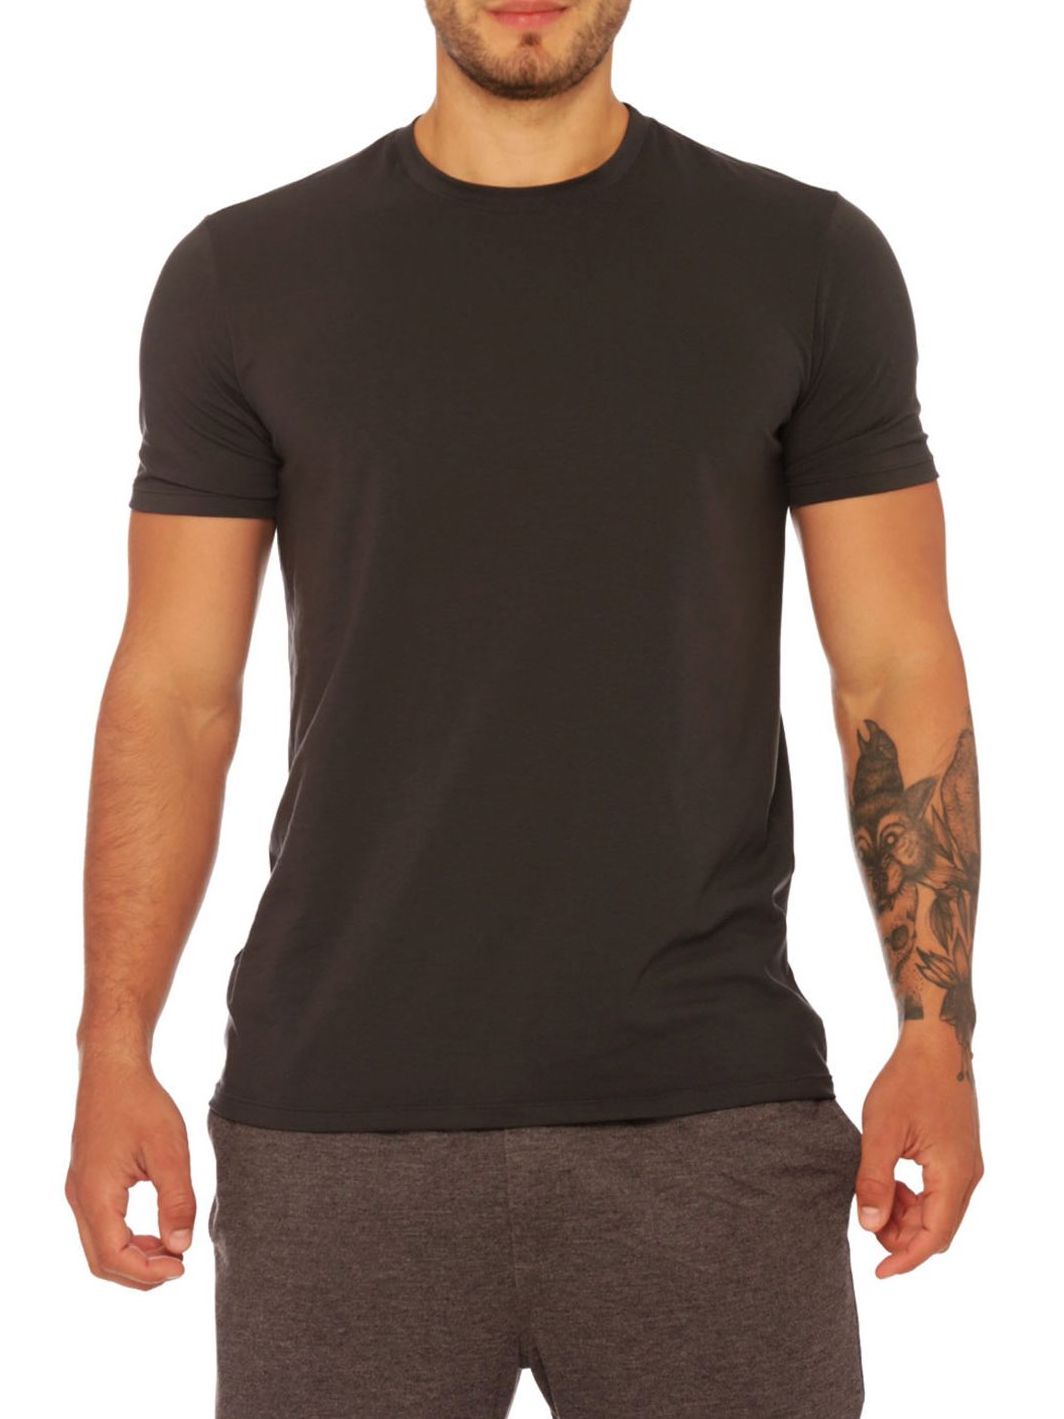 Mundo Unico Comfort Wear T-Shirt | Grey